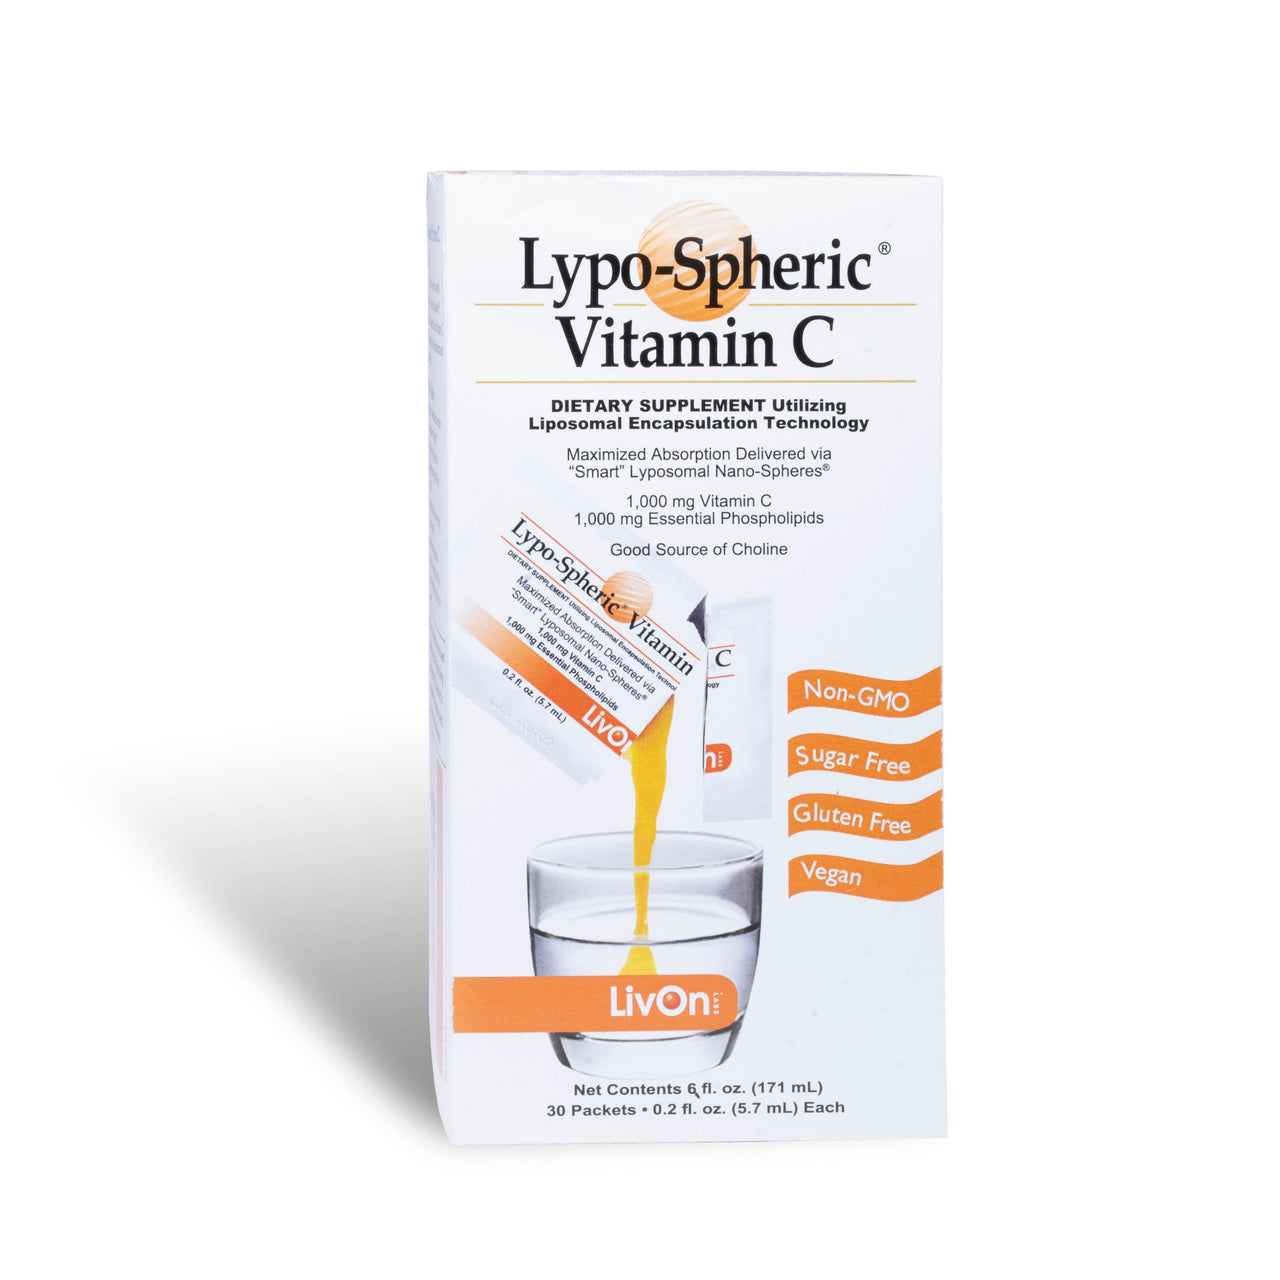 Staff: Lypo-Spheric® Vitamin C